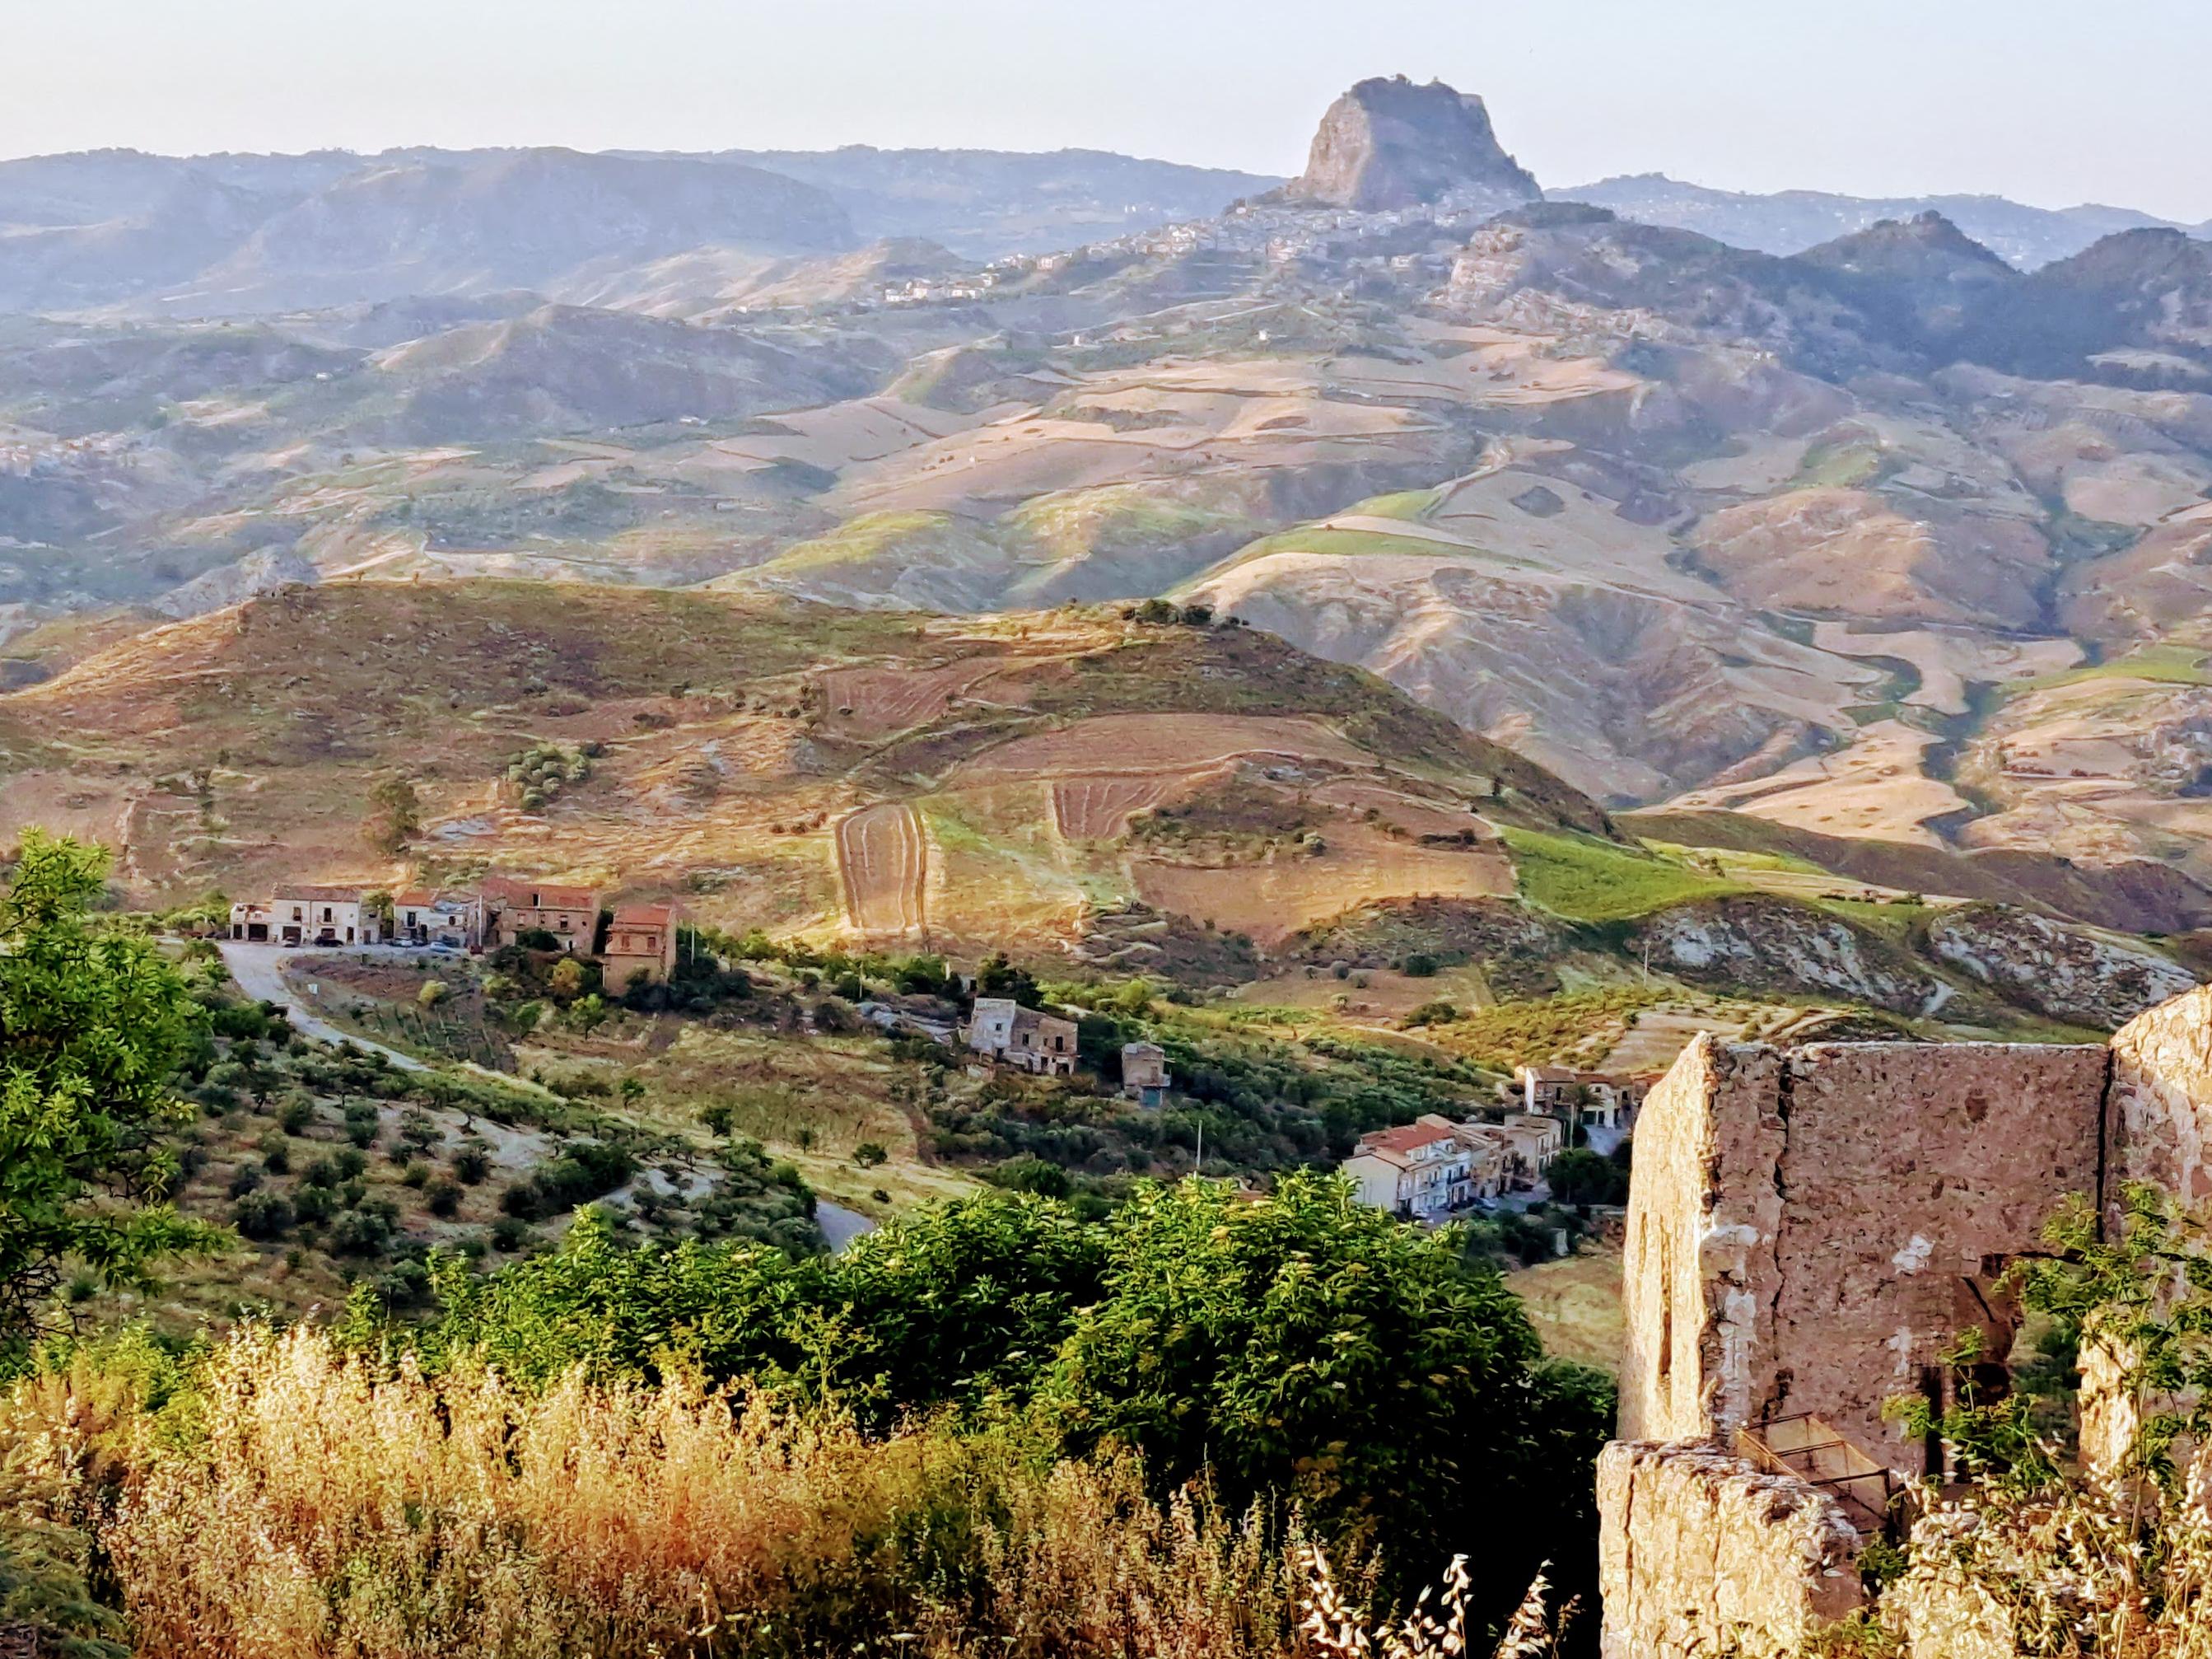 A panoramic shot of the Sardinian countryside